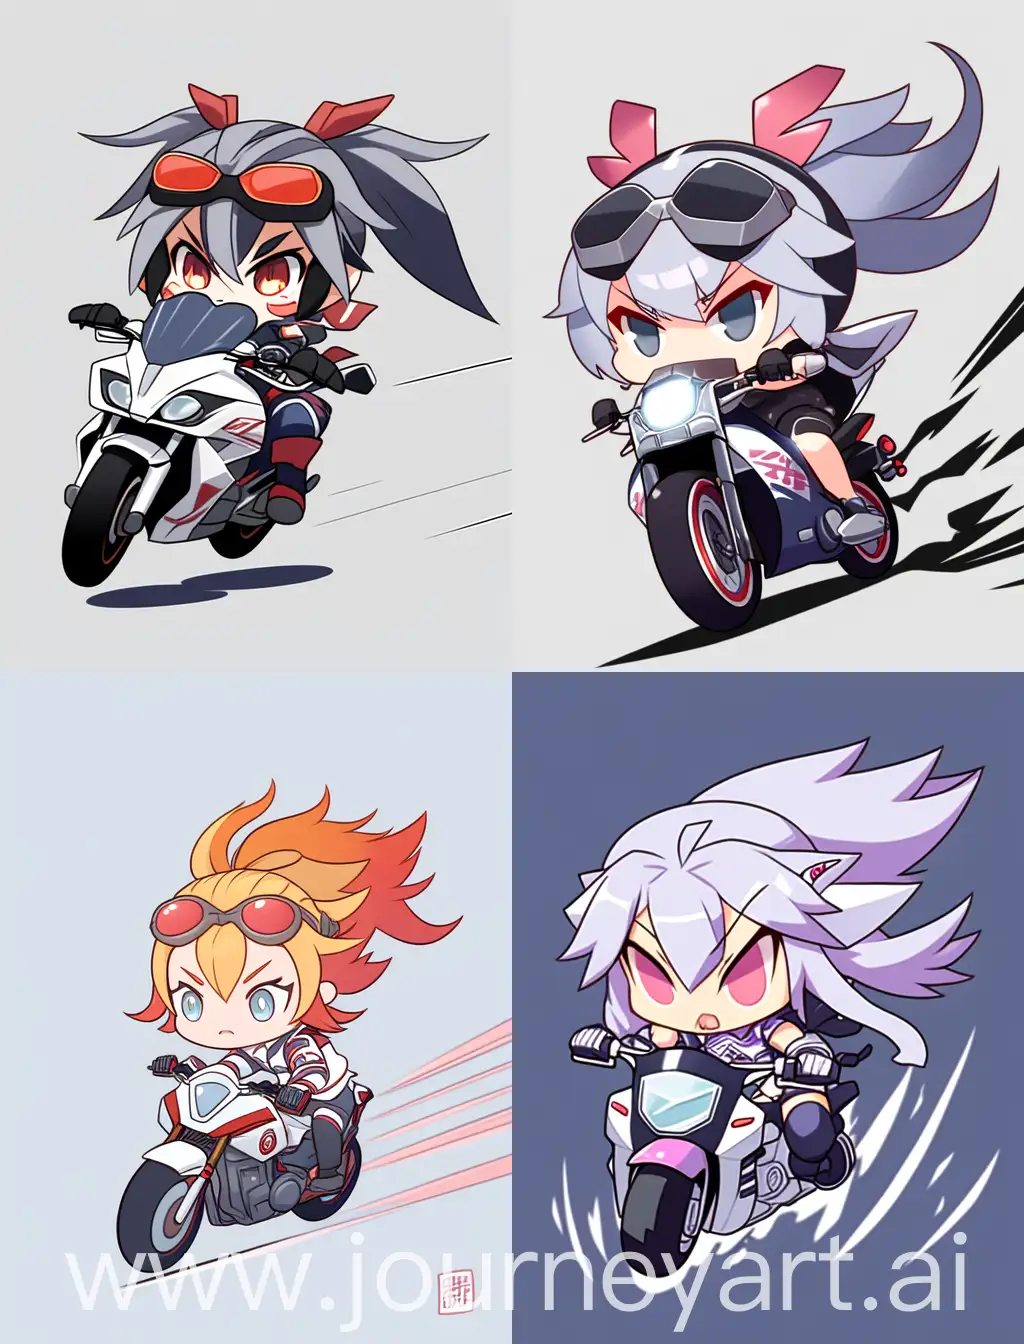 Fierce-Anime-Girl-Riding-Motorcycle-in-Bold-Cartoon-Style